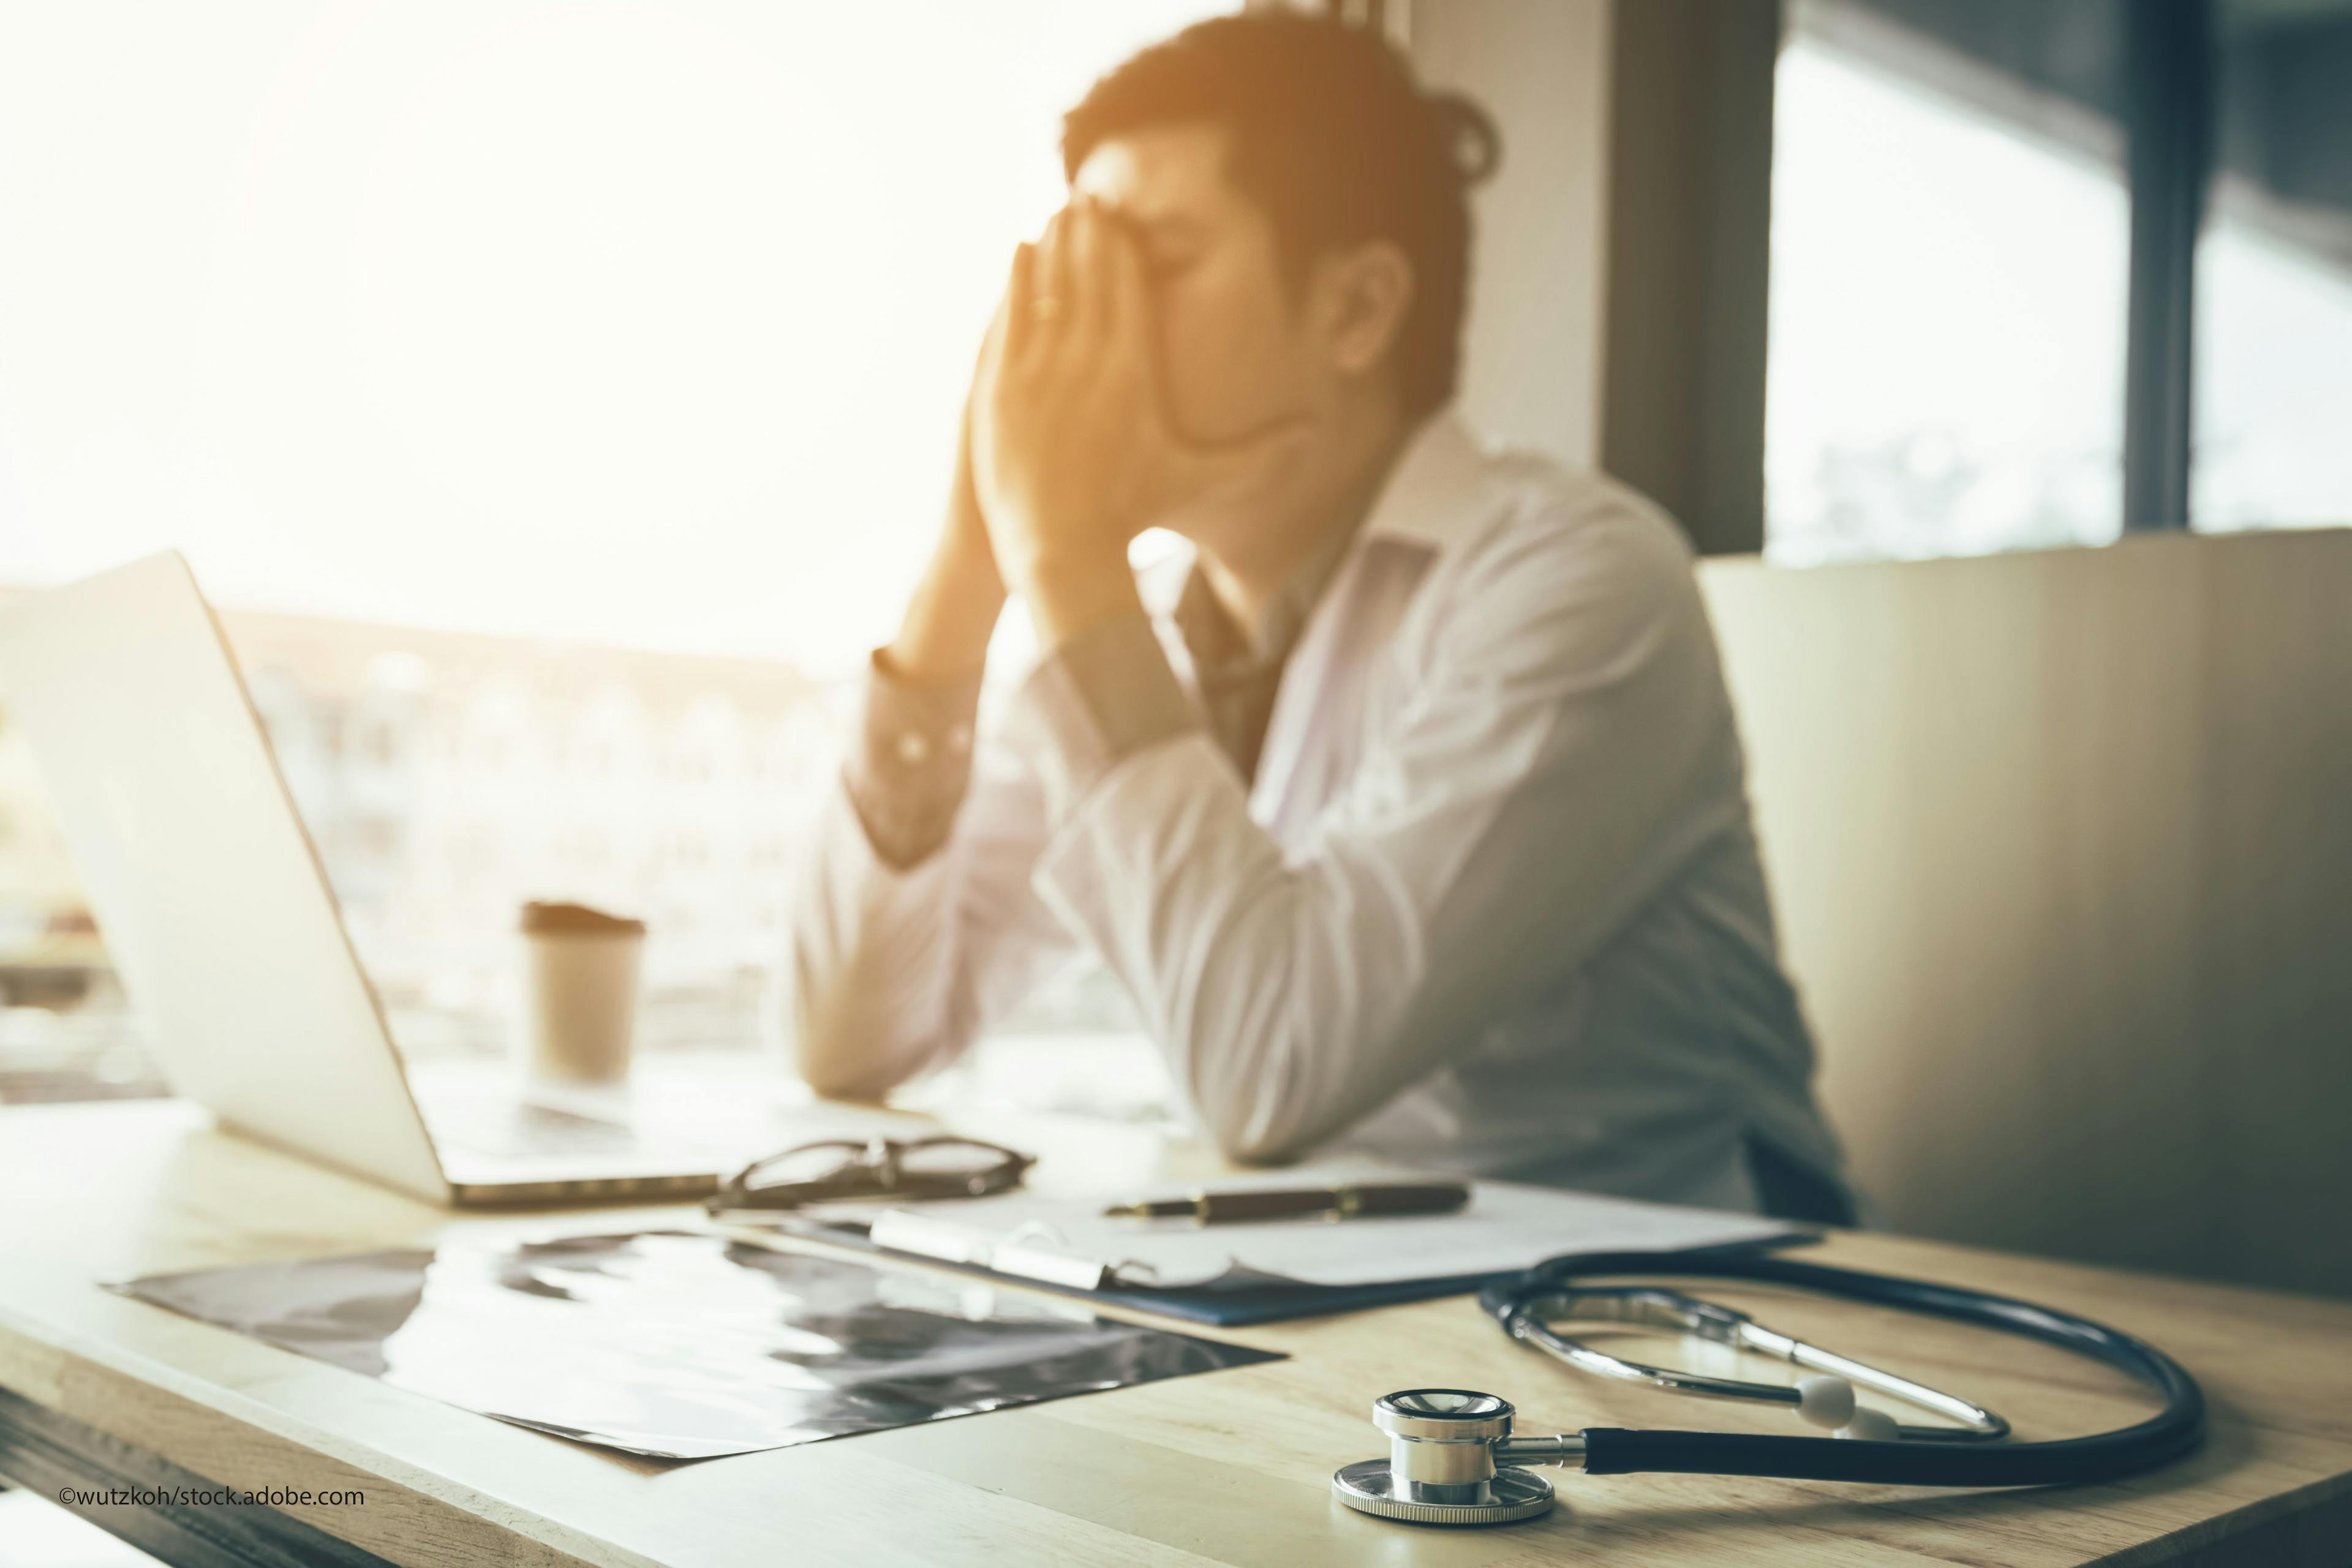 Can AI help prevent physician burnout?